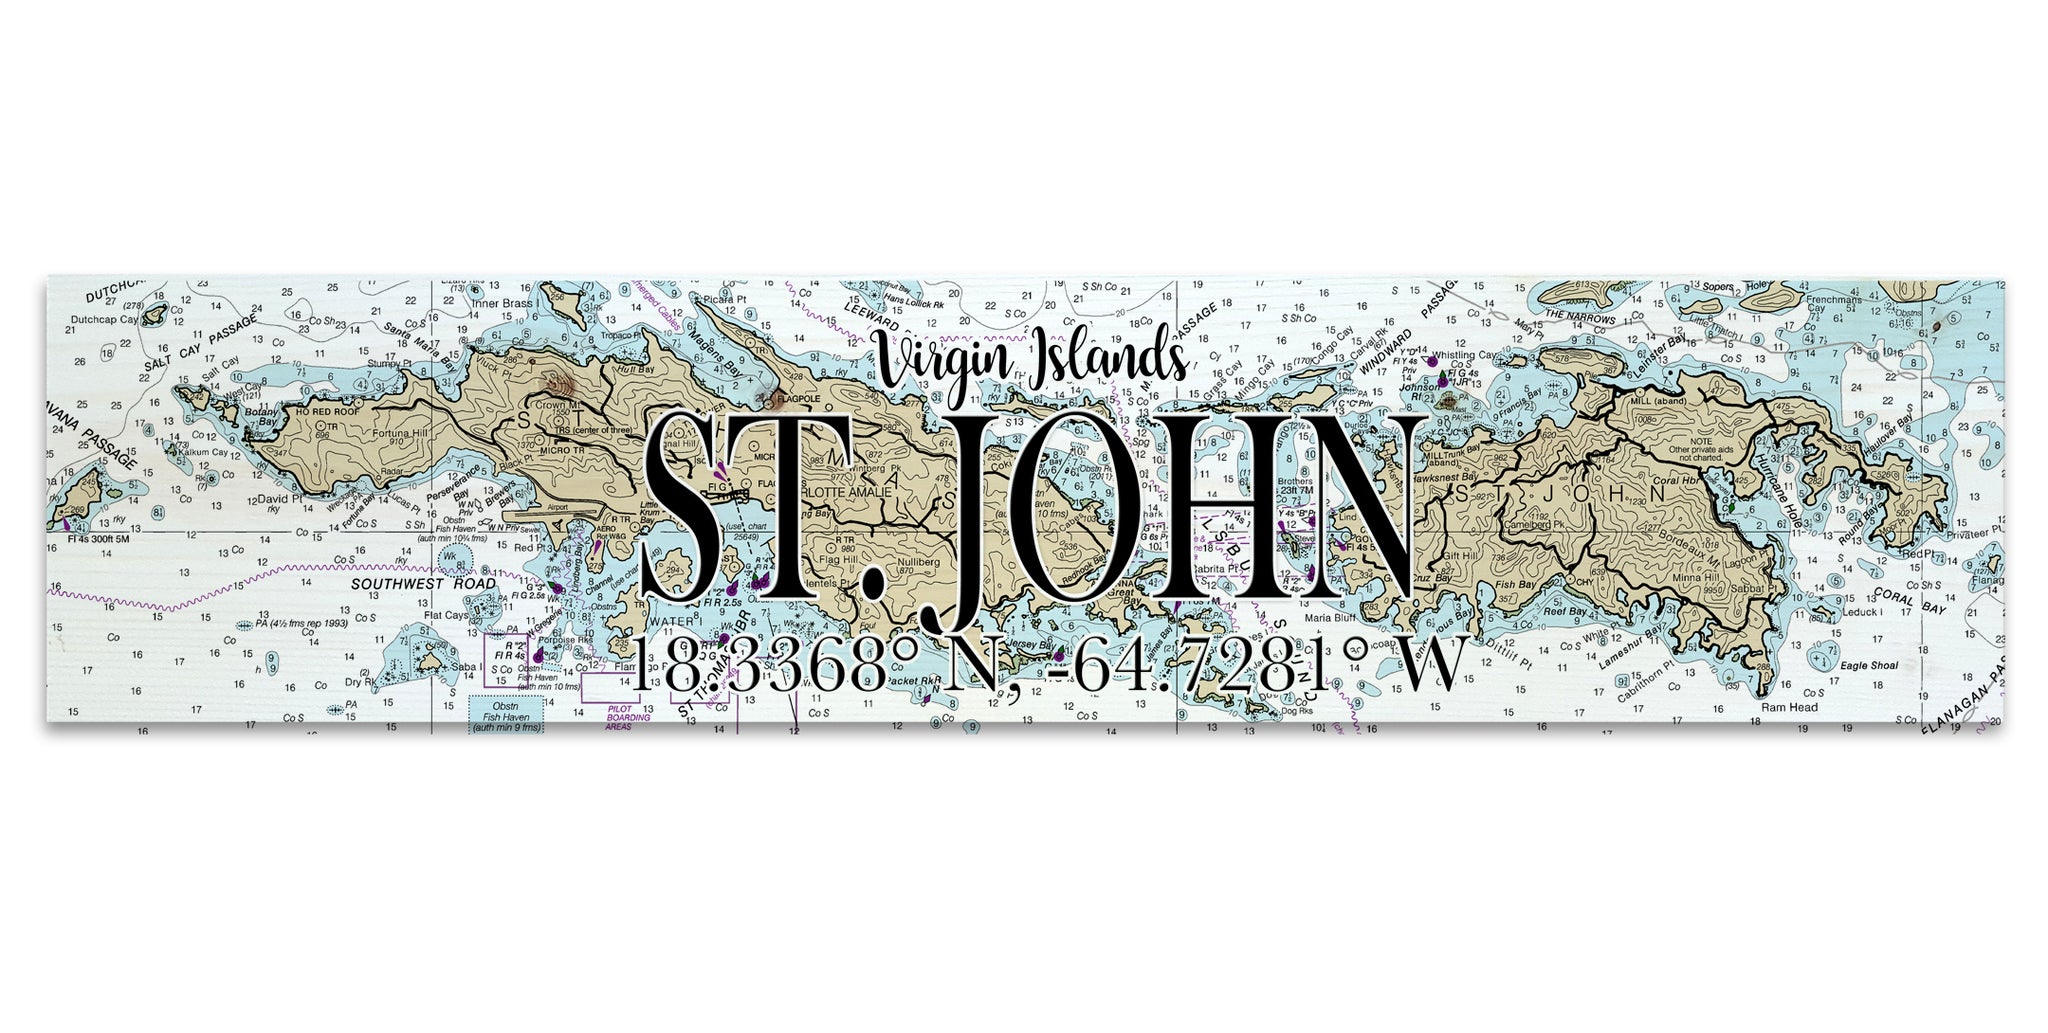 St. John, USVI Coordinate Sign